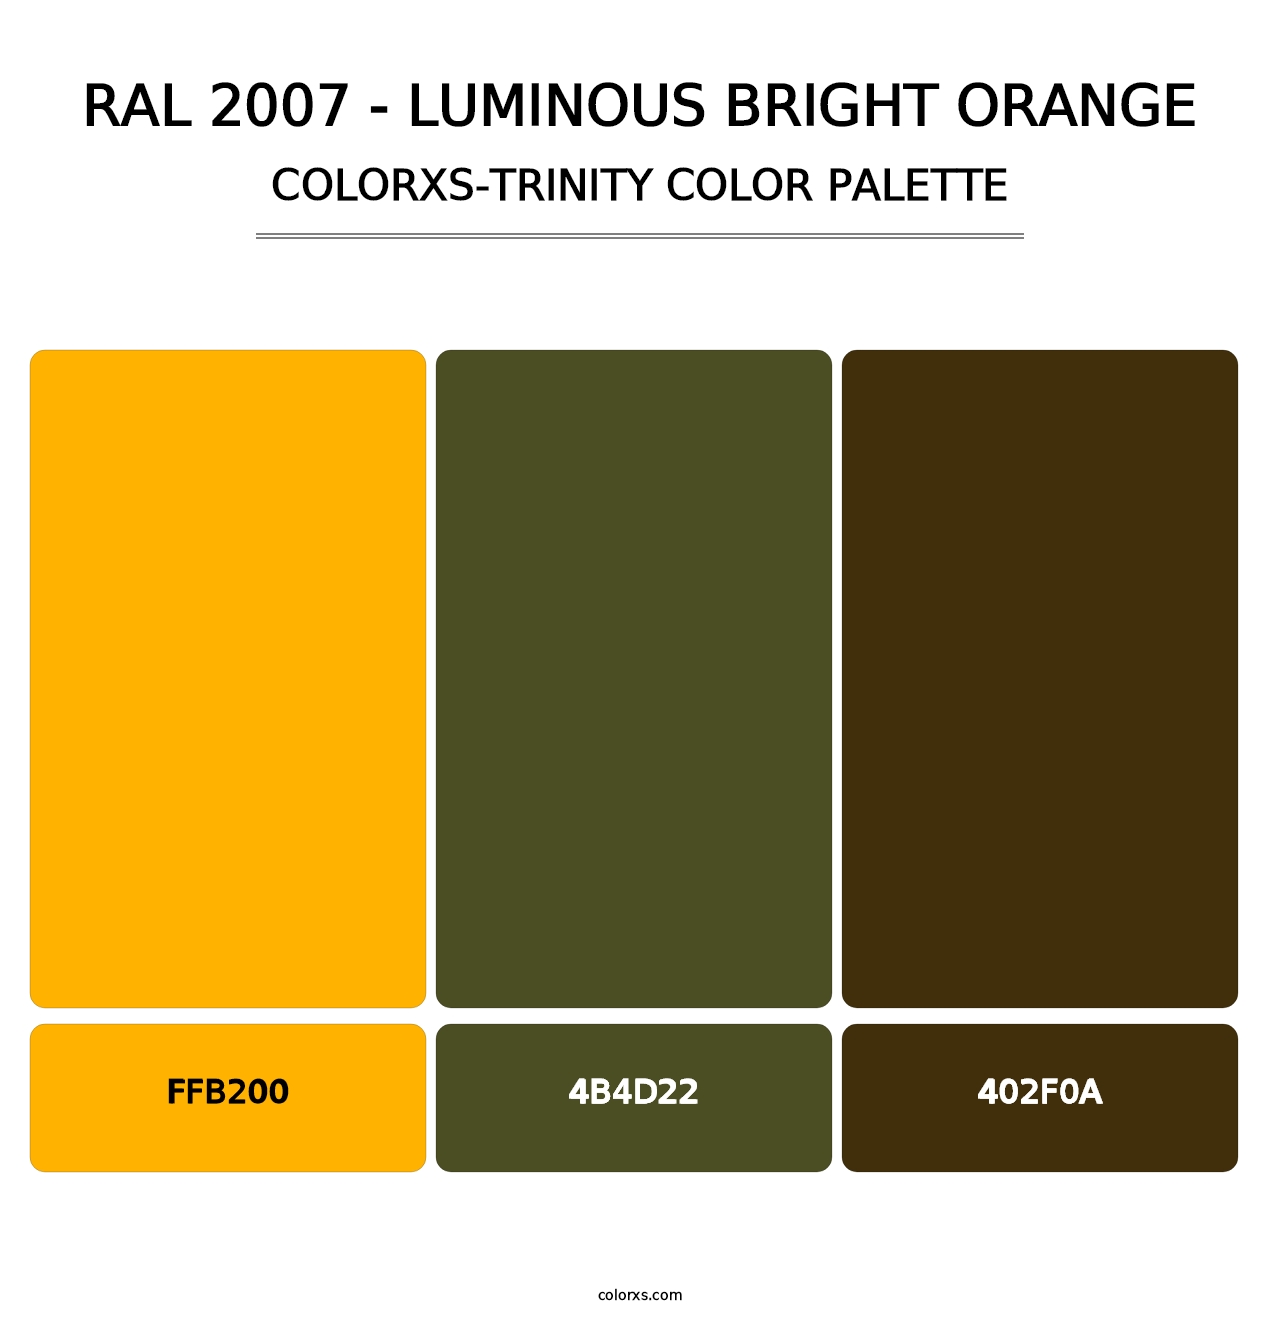 RAL 2007 - Luminous Bright Orange - Colorxs Trinity Palette